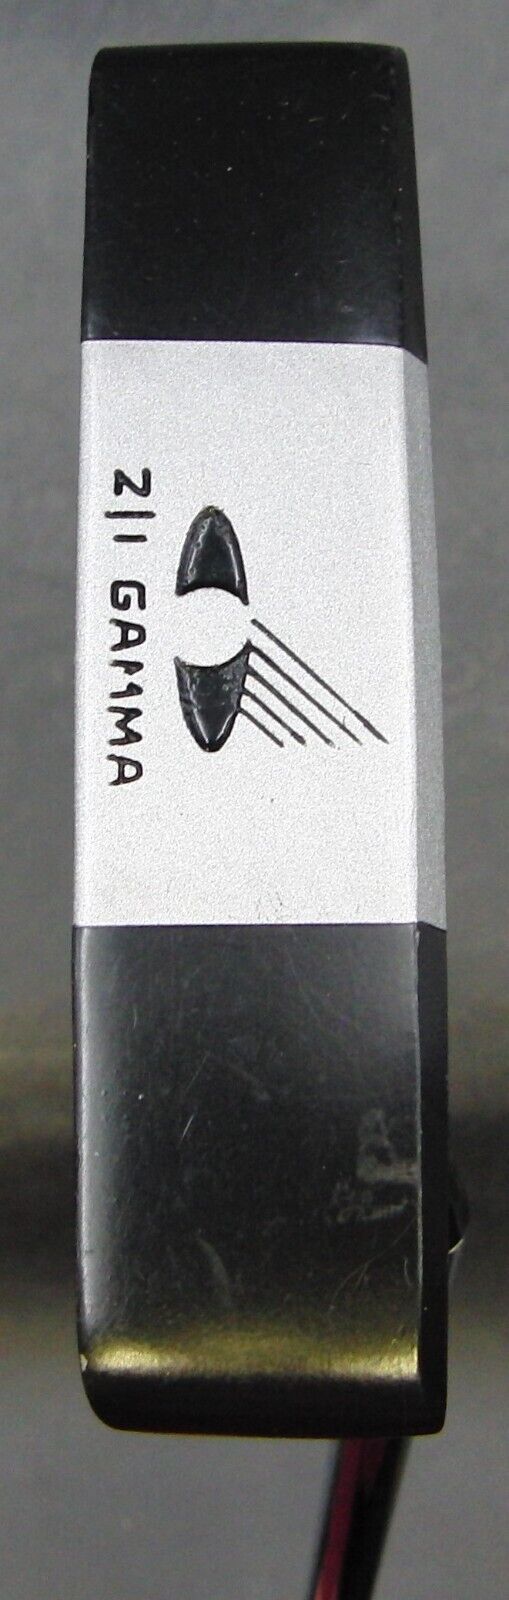 Never Compromise Zii Gamma Putter Steel Shaft 87cm Length Psyko Grip